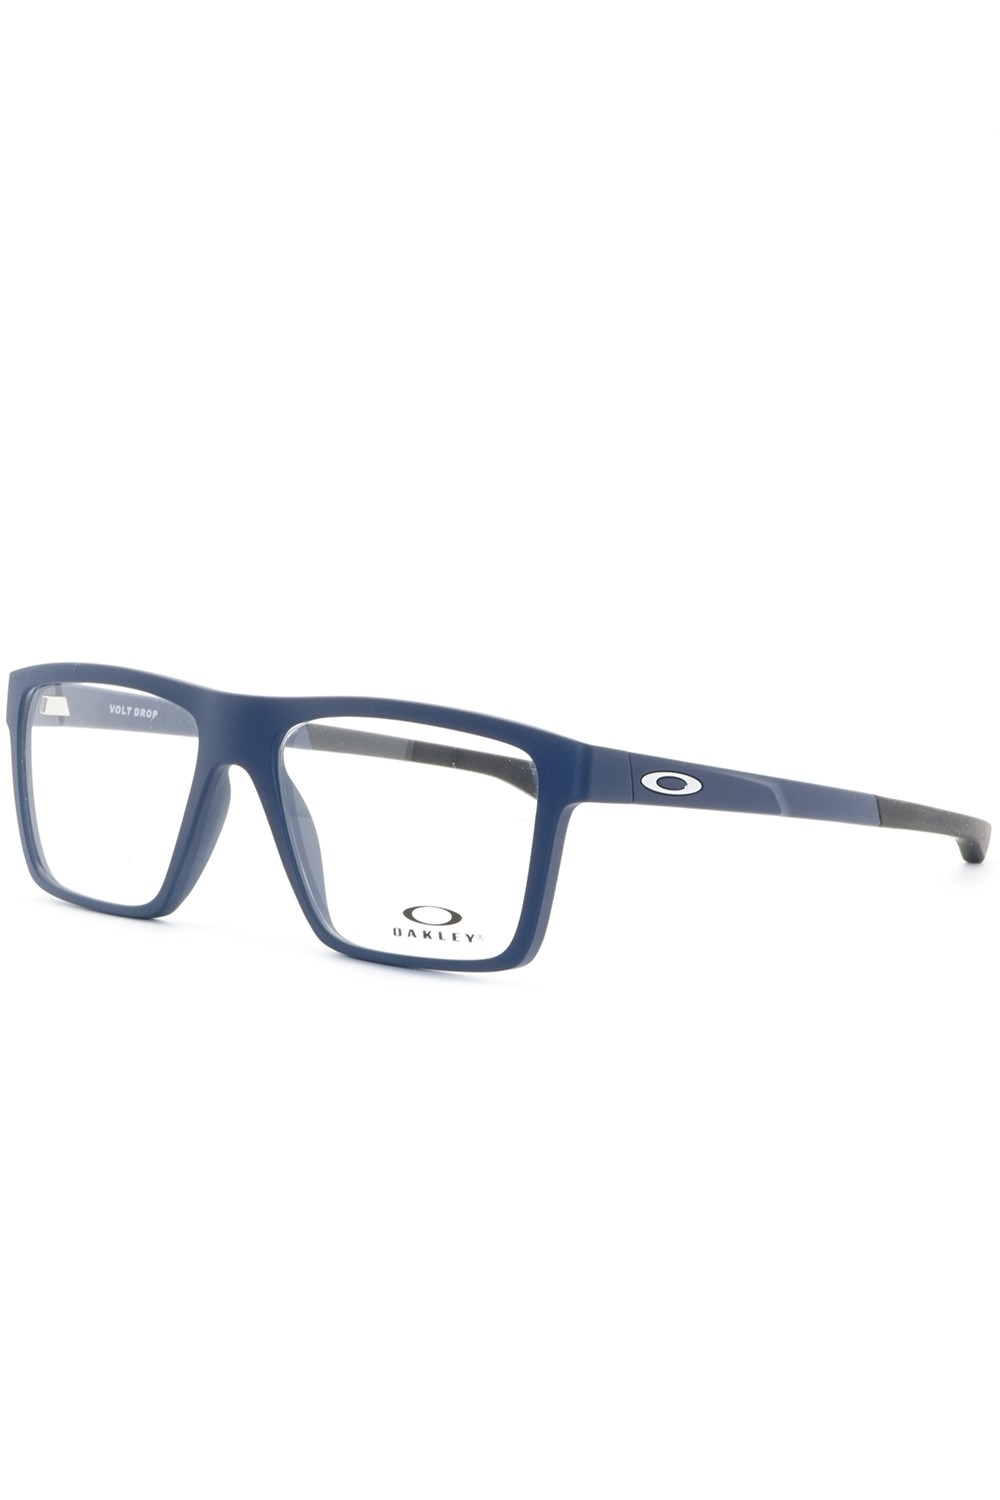 Oakley - Occhiali da vista sportivi squadrati per uomo blu - OX8177 0654